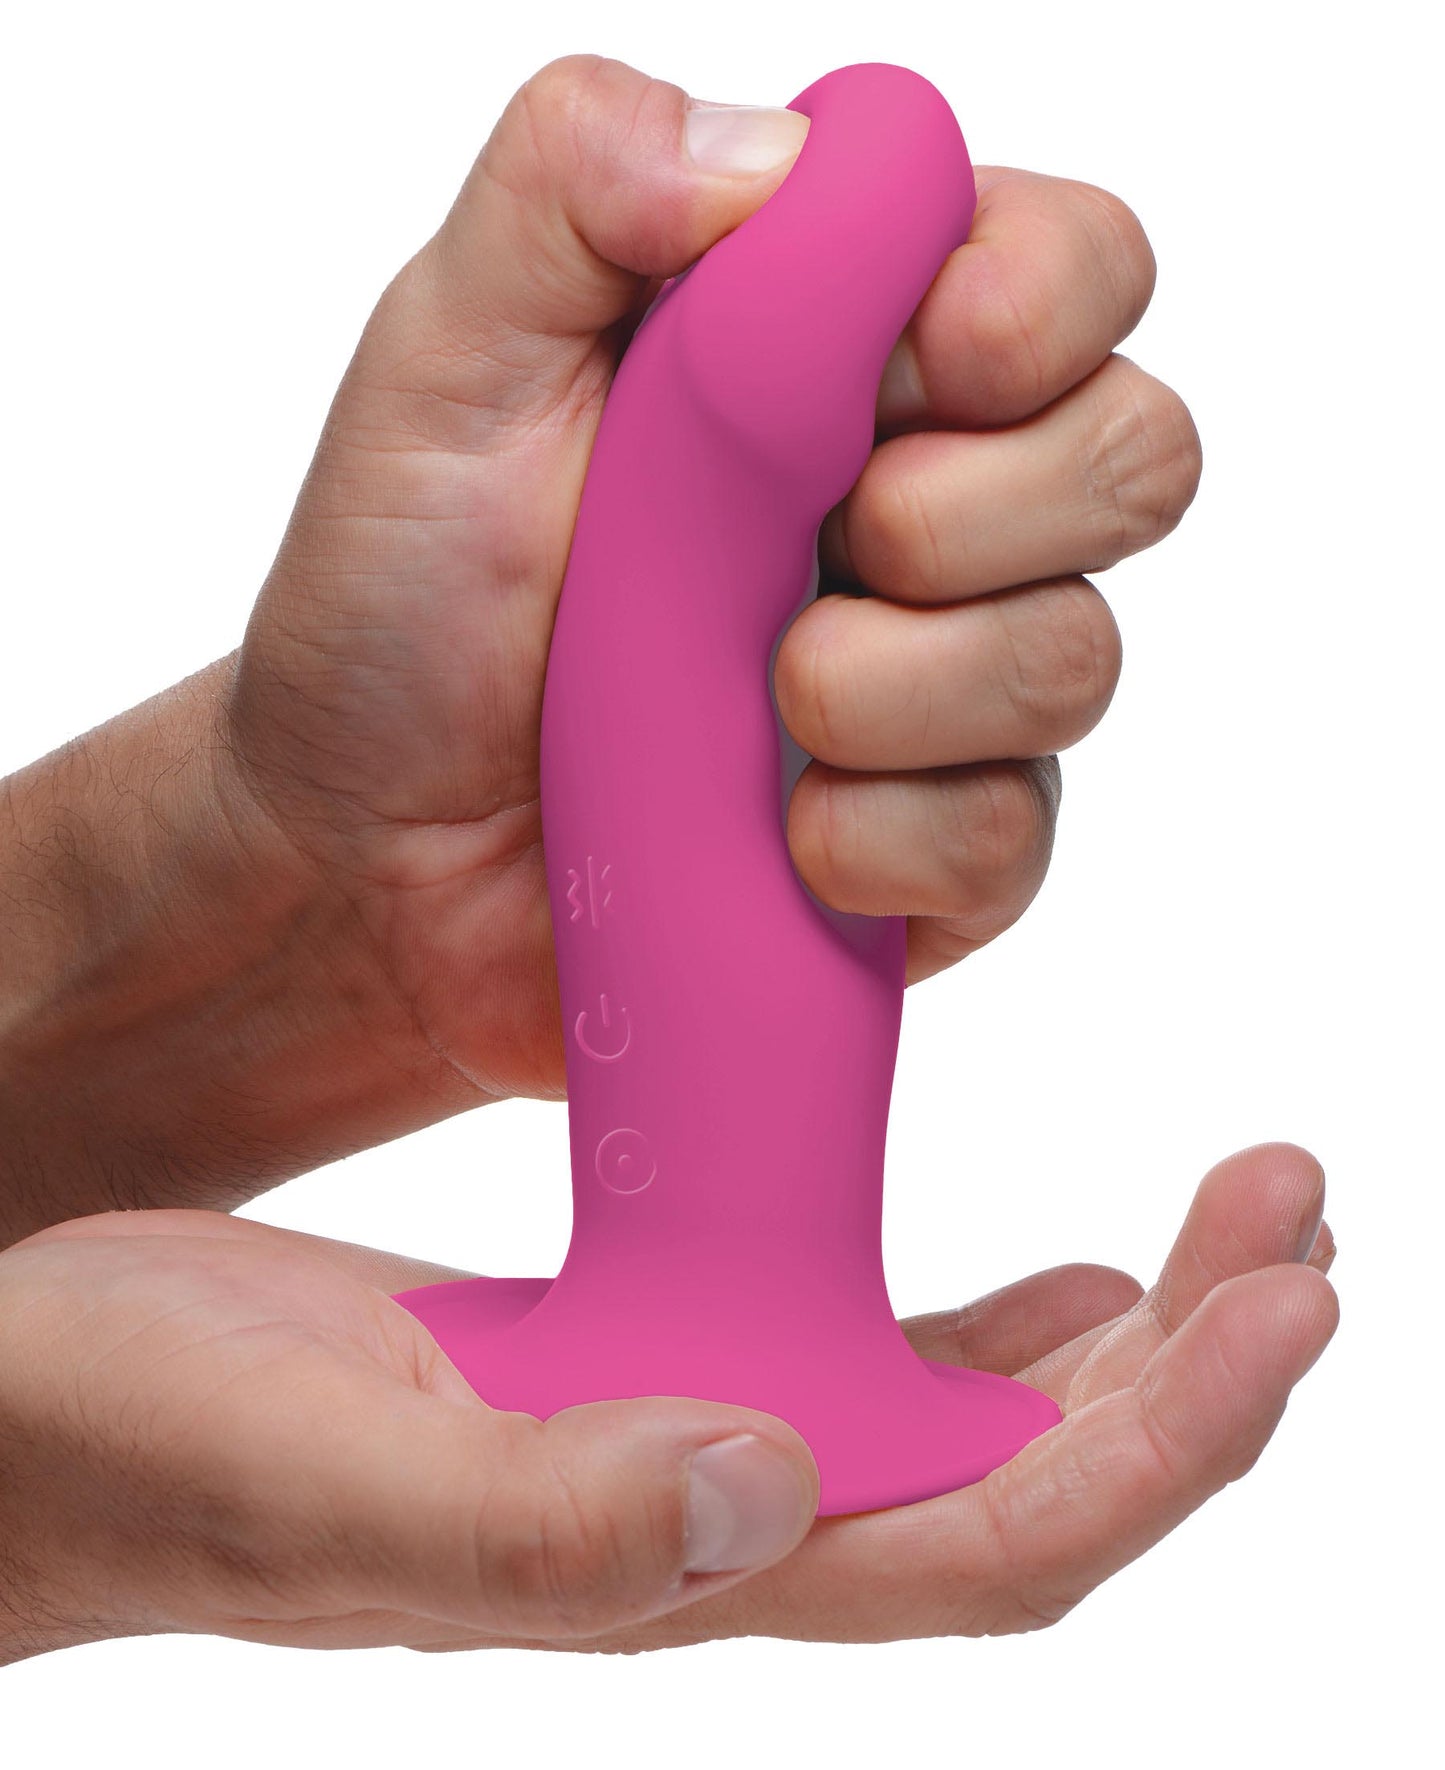 10X Squeezable Vibrating Dildo - Pink - UABDSM